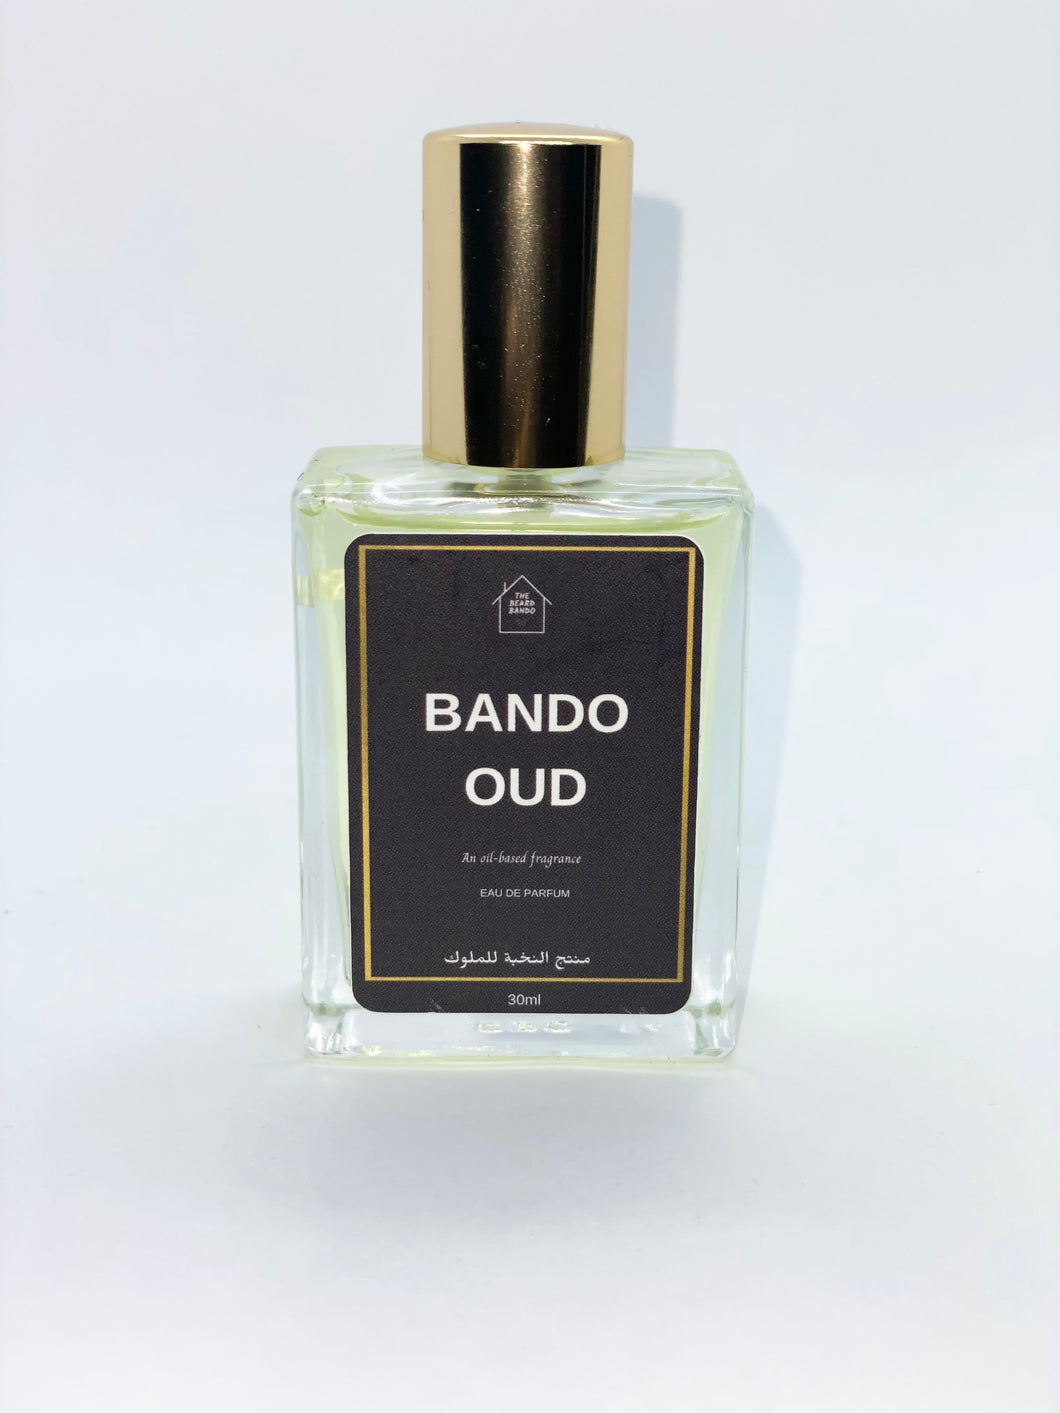 “Maison” Oud by the Beard Bando